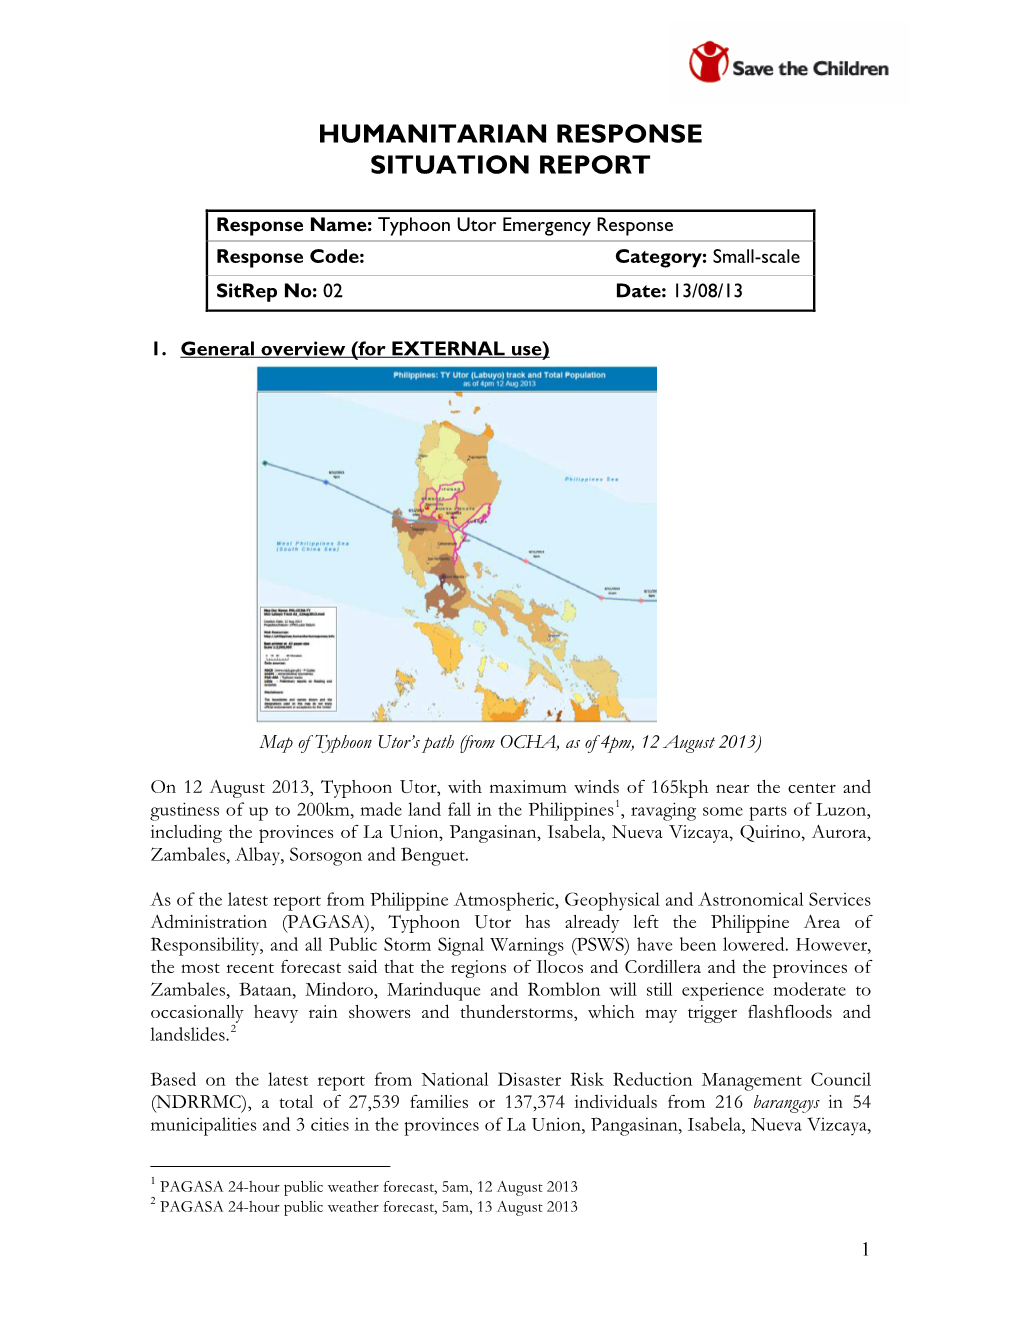 Philippines Sitrep #2 Typhoon Utor